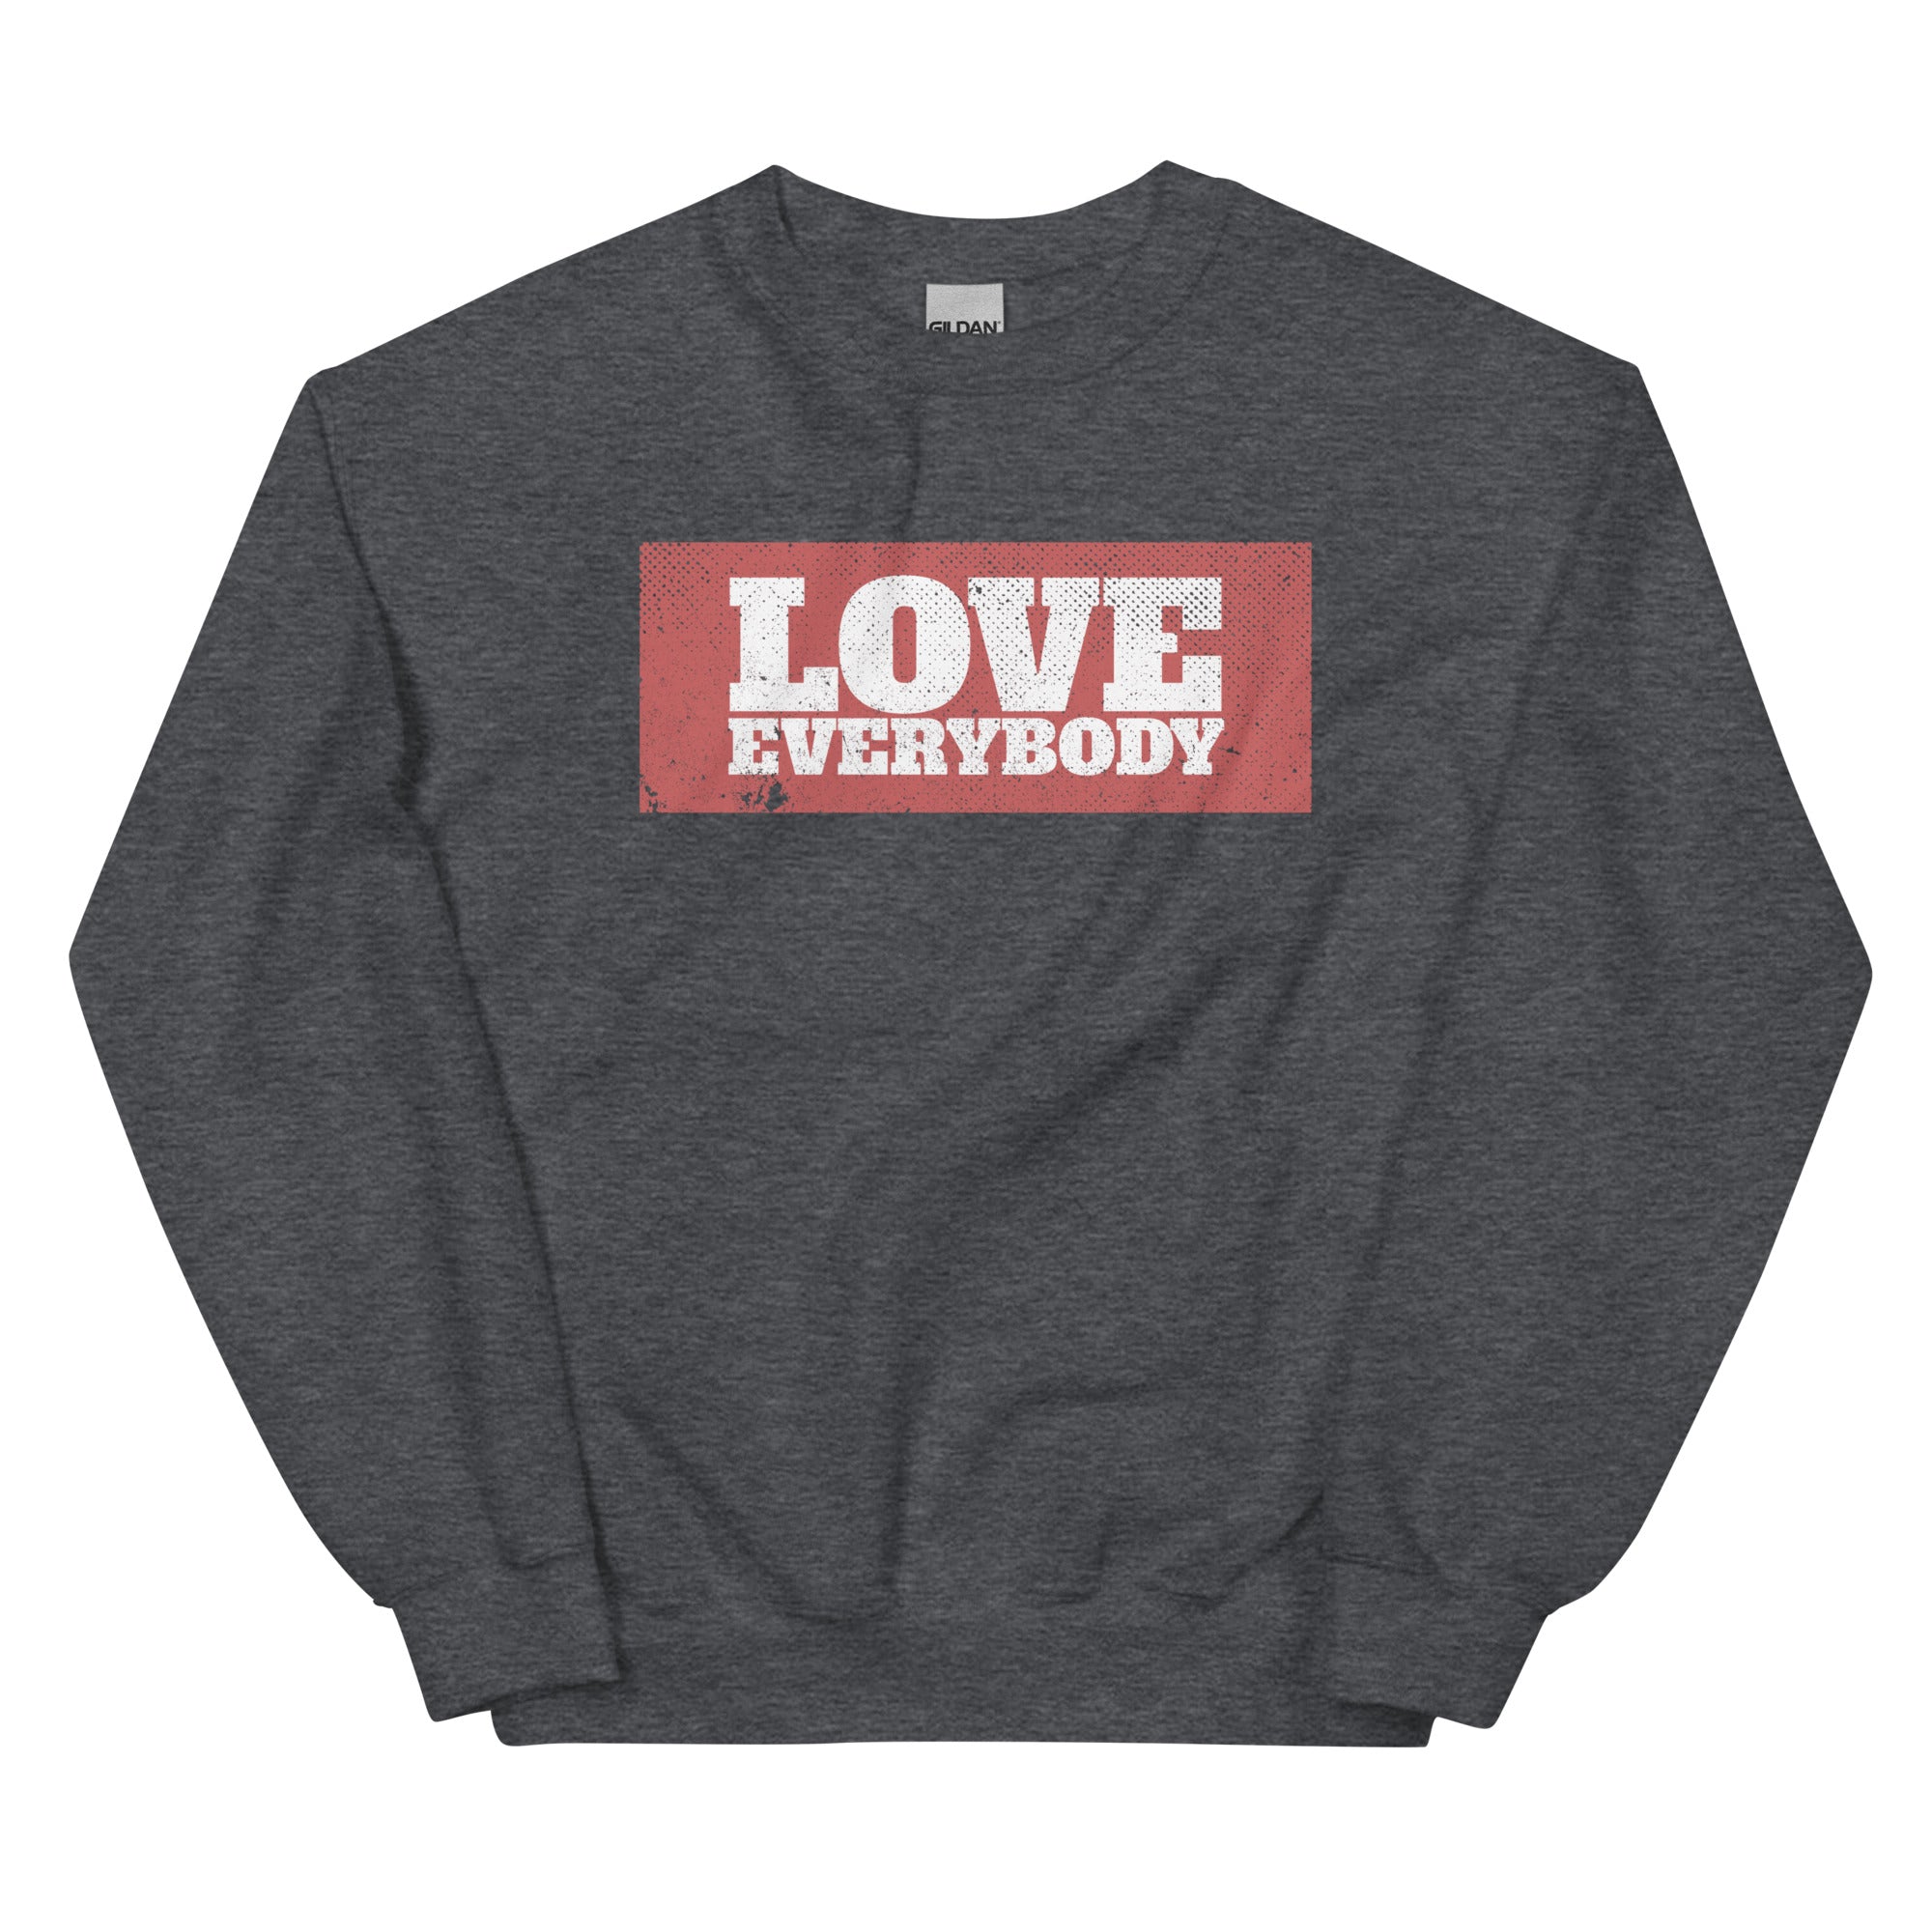 LOVE EVERYBODY - Unisex Sweatshirt